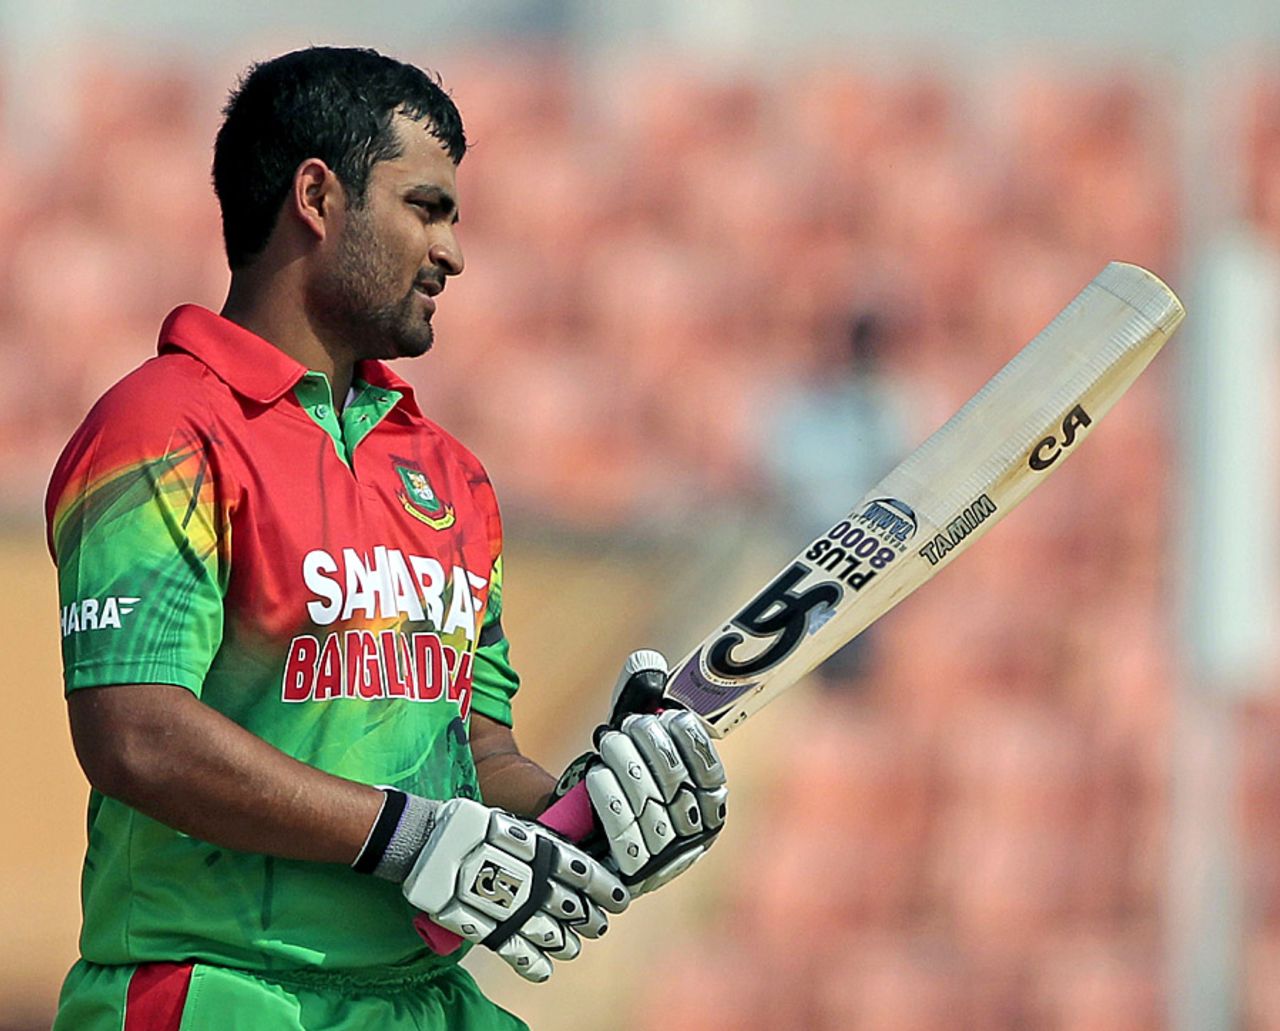 Tamim Iqbal is disappointed after being dismissed, Bangladesh Cricket Board XI v Bangladesh, Khulna, November 27, 2012